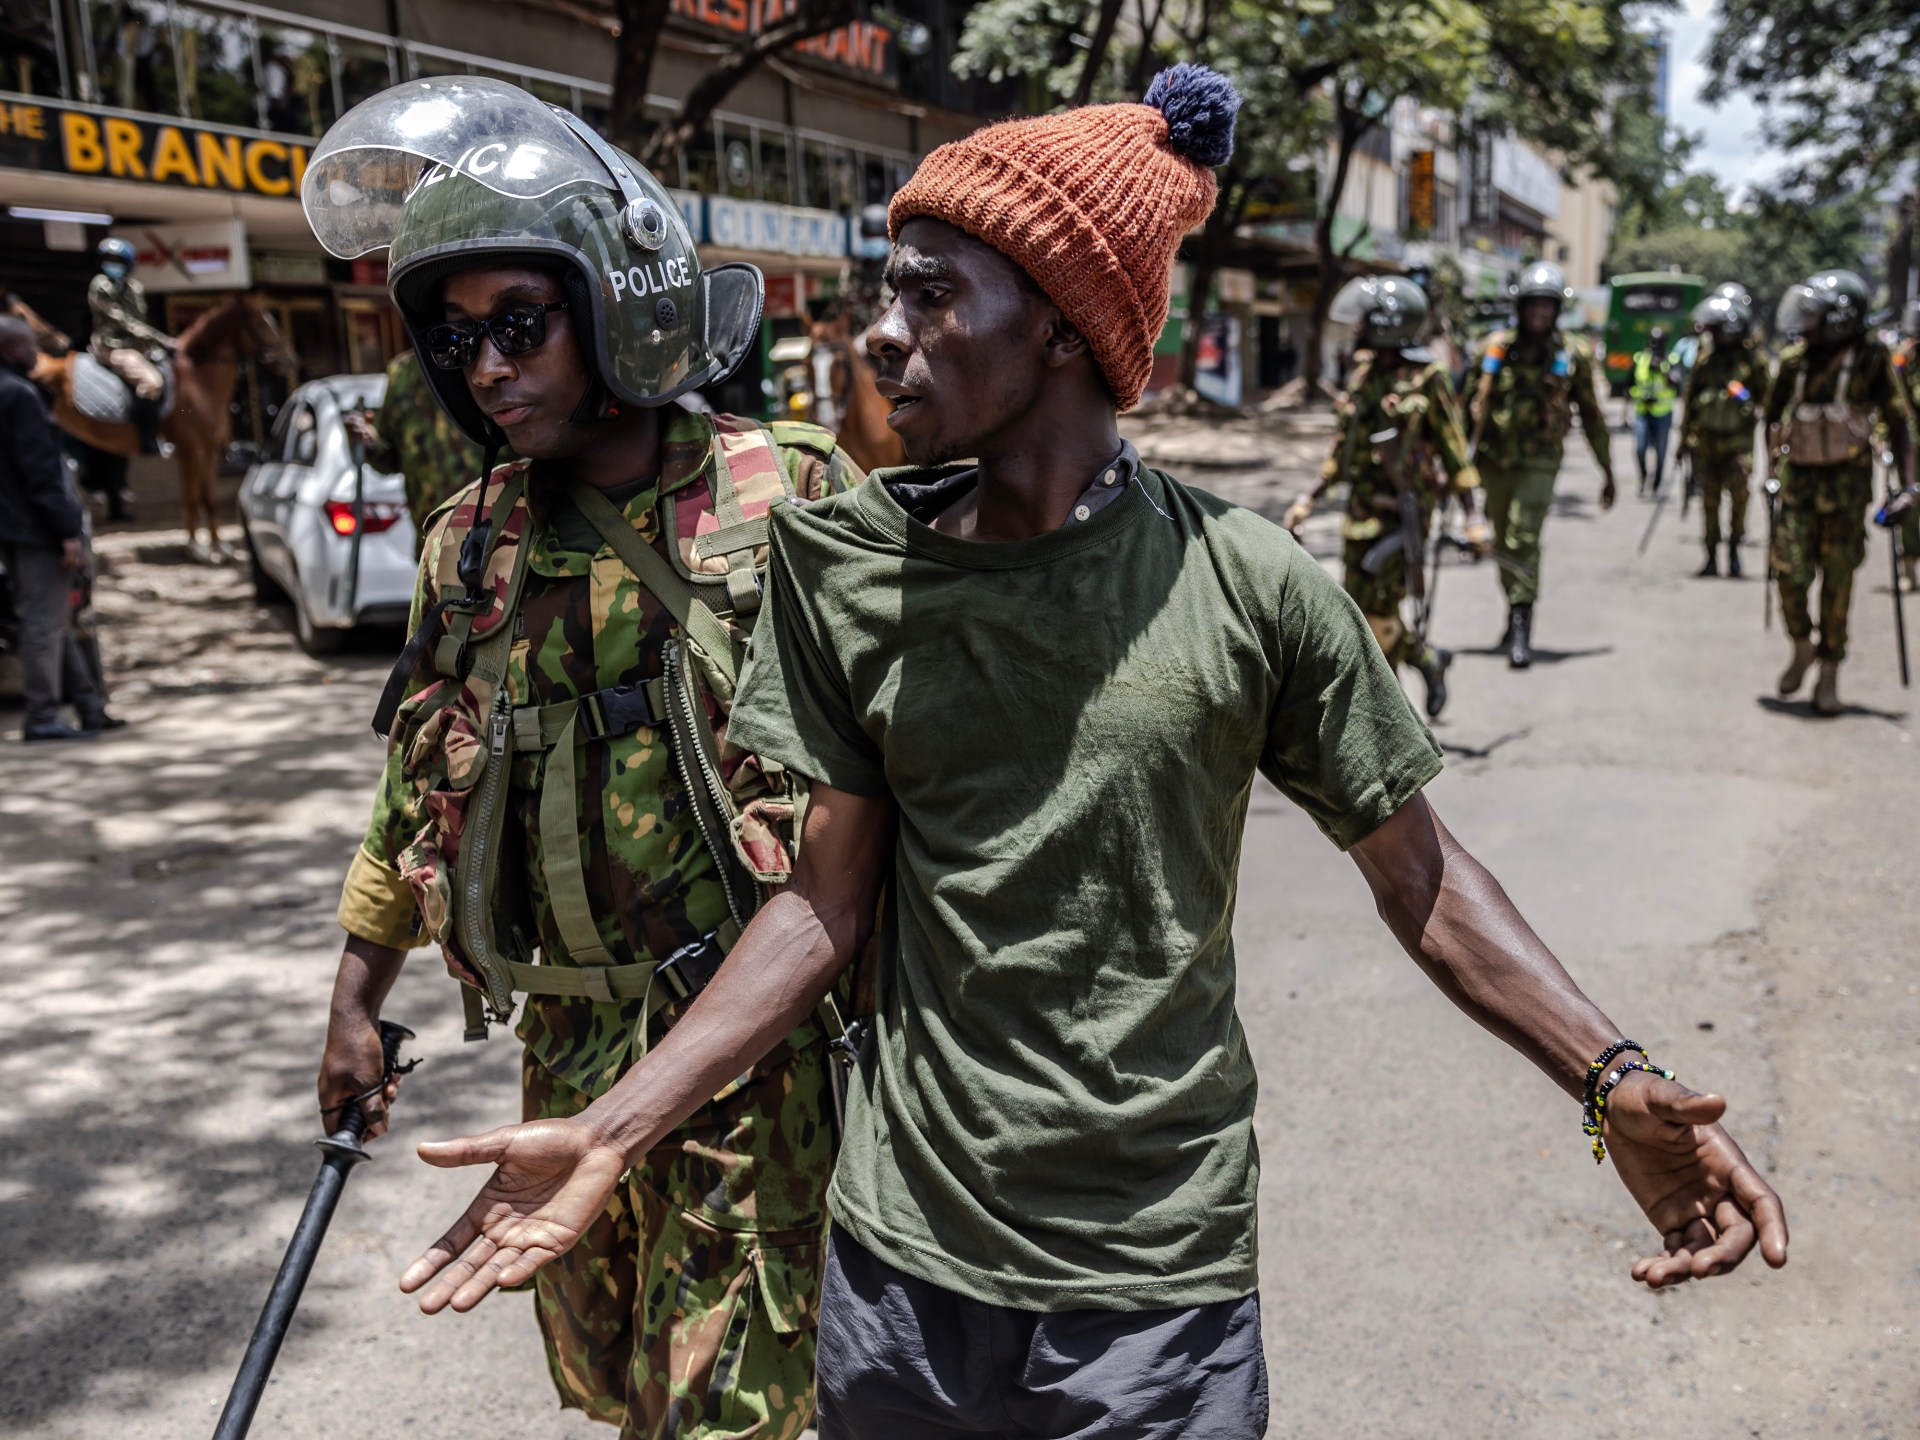 Student killed, 200 people arrested in Kenya protests – police